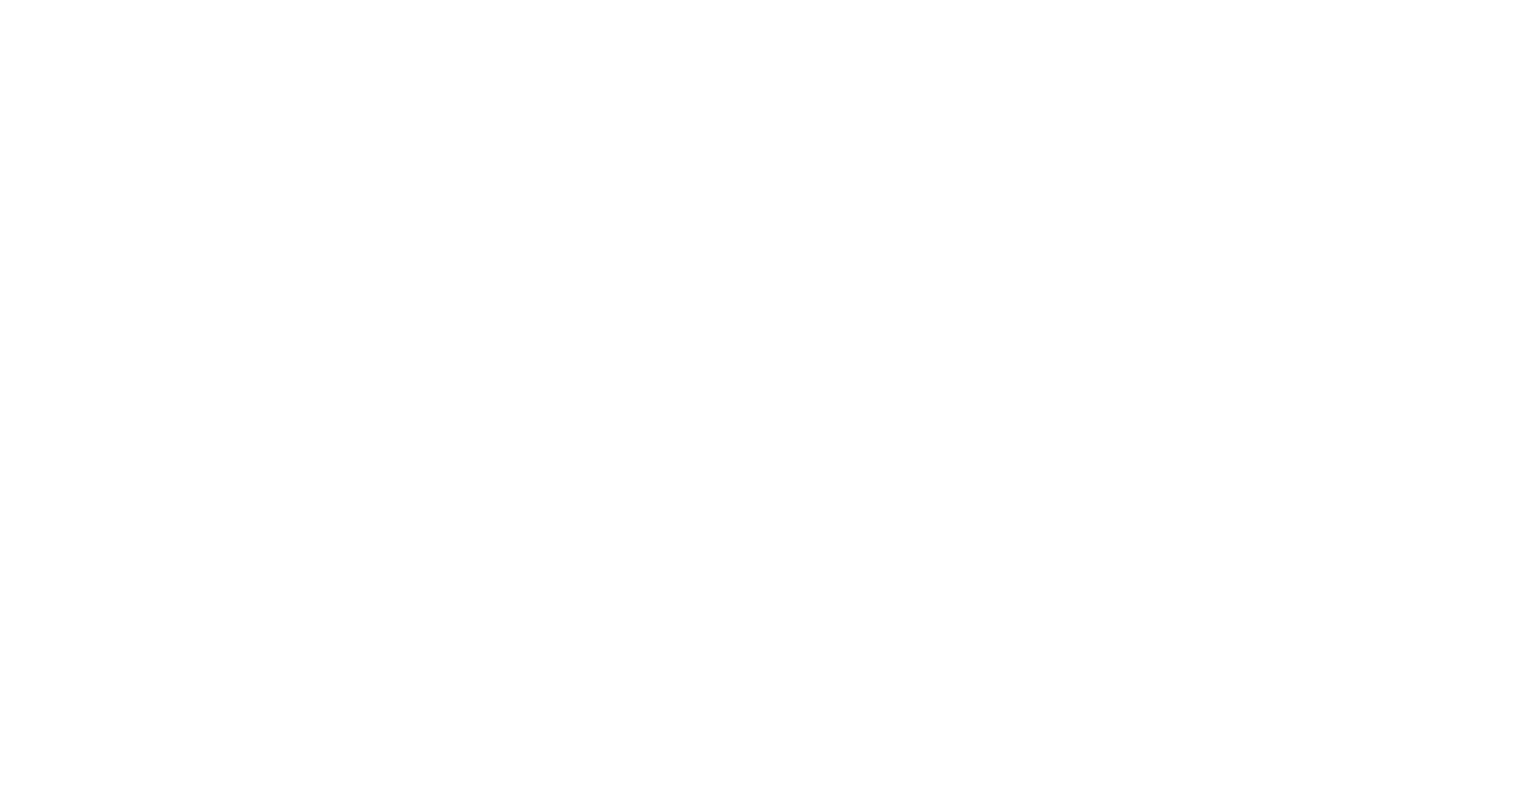 Harrow Health logo large for dark backgrounds (transparent PNG)